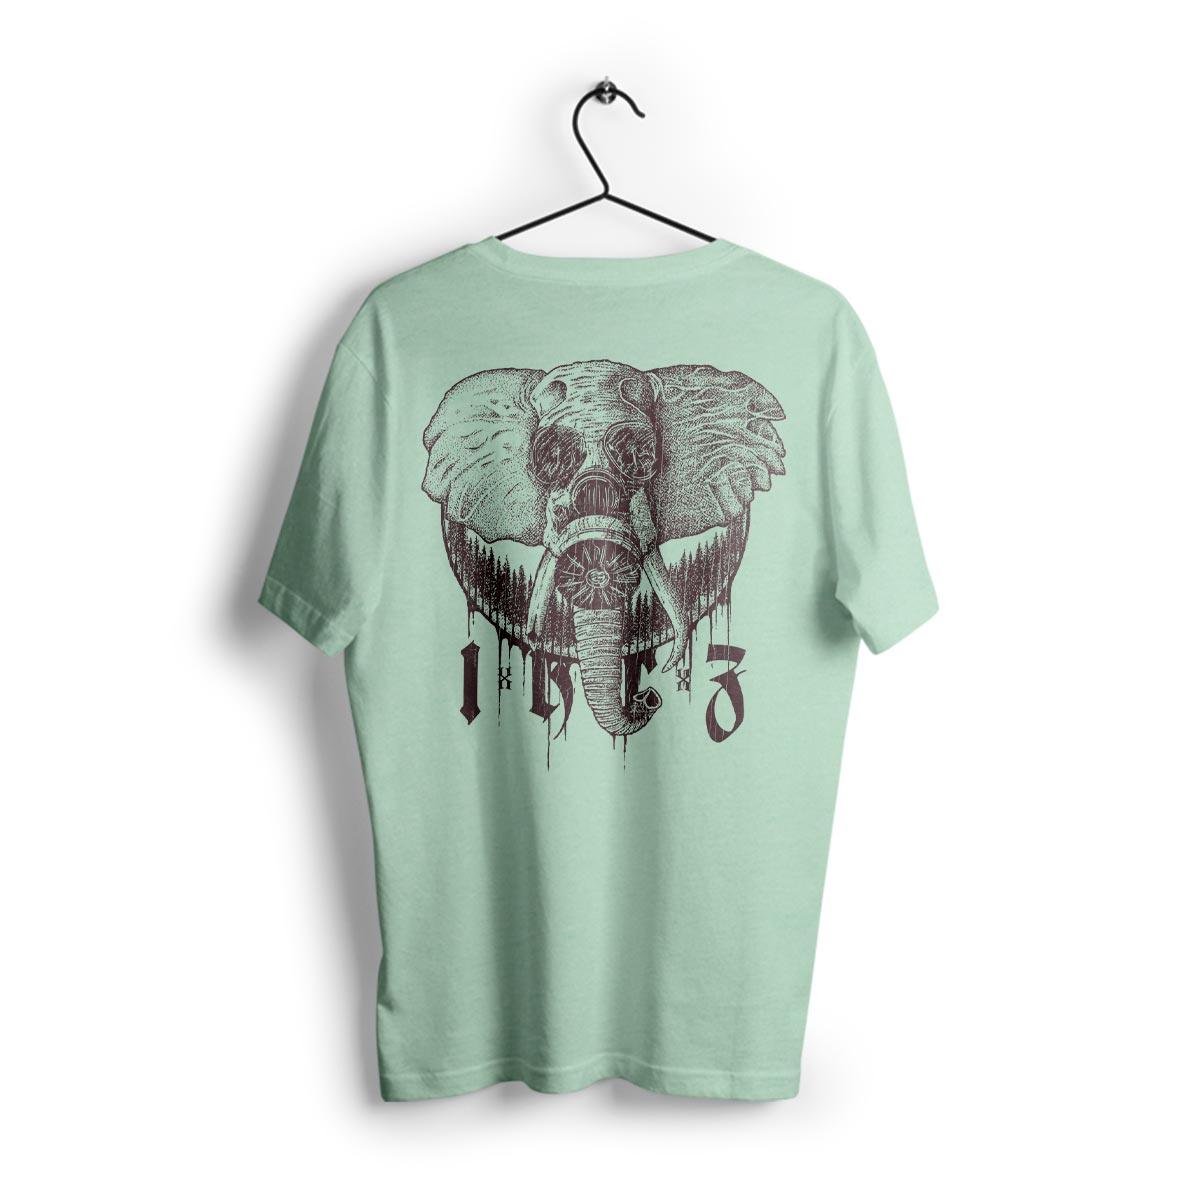 Ikrz | Elephant | Mint Shirt - Ikaruz